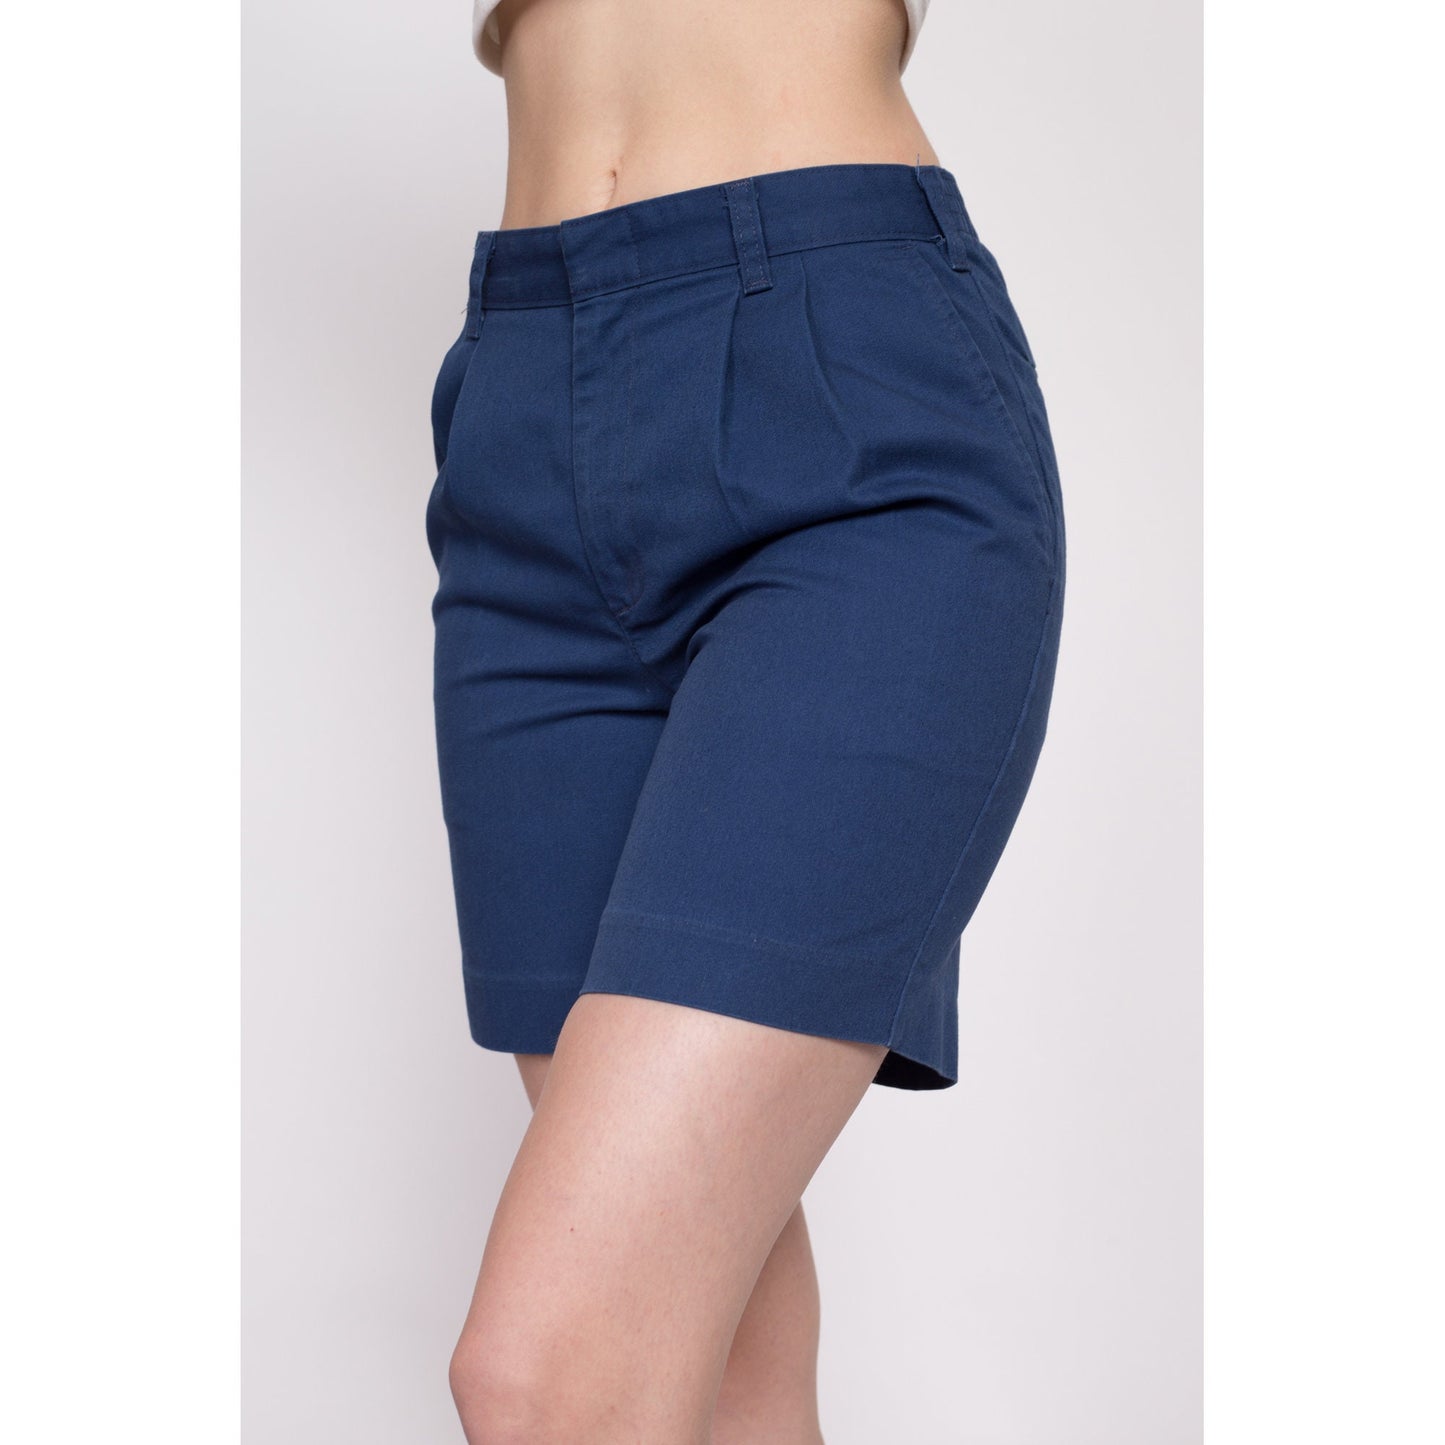 80s Navy Blue Pleated Shorts - Petite Small, 26"-27" | Vintage High Waisted Elastic Waist Uniform Shorts